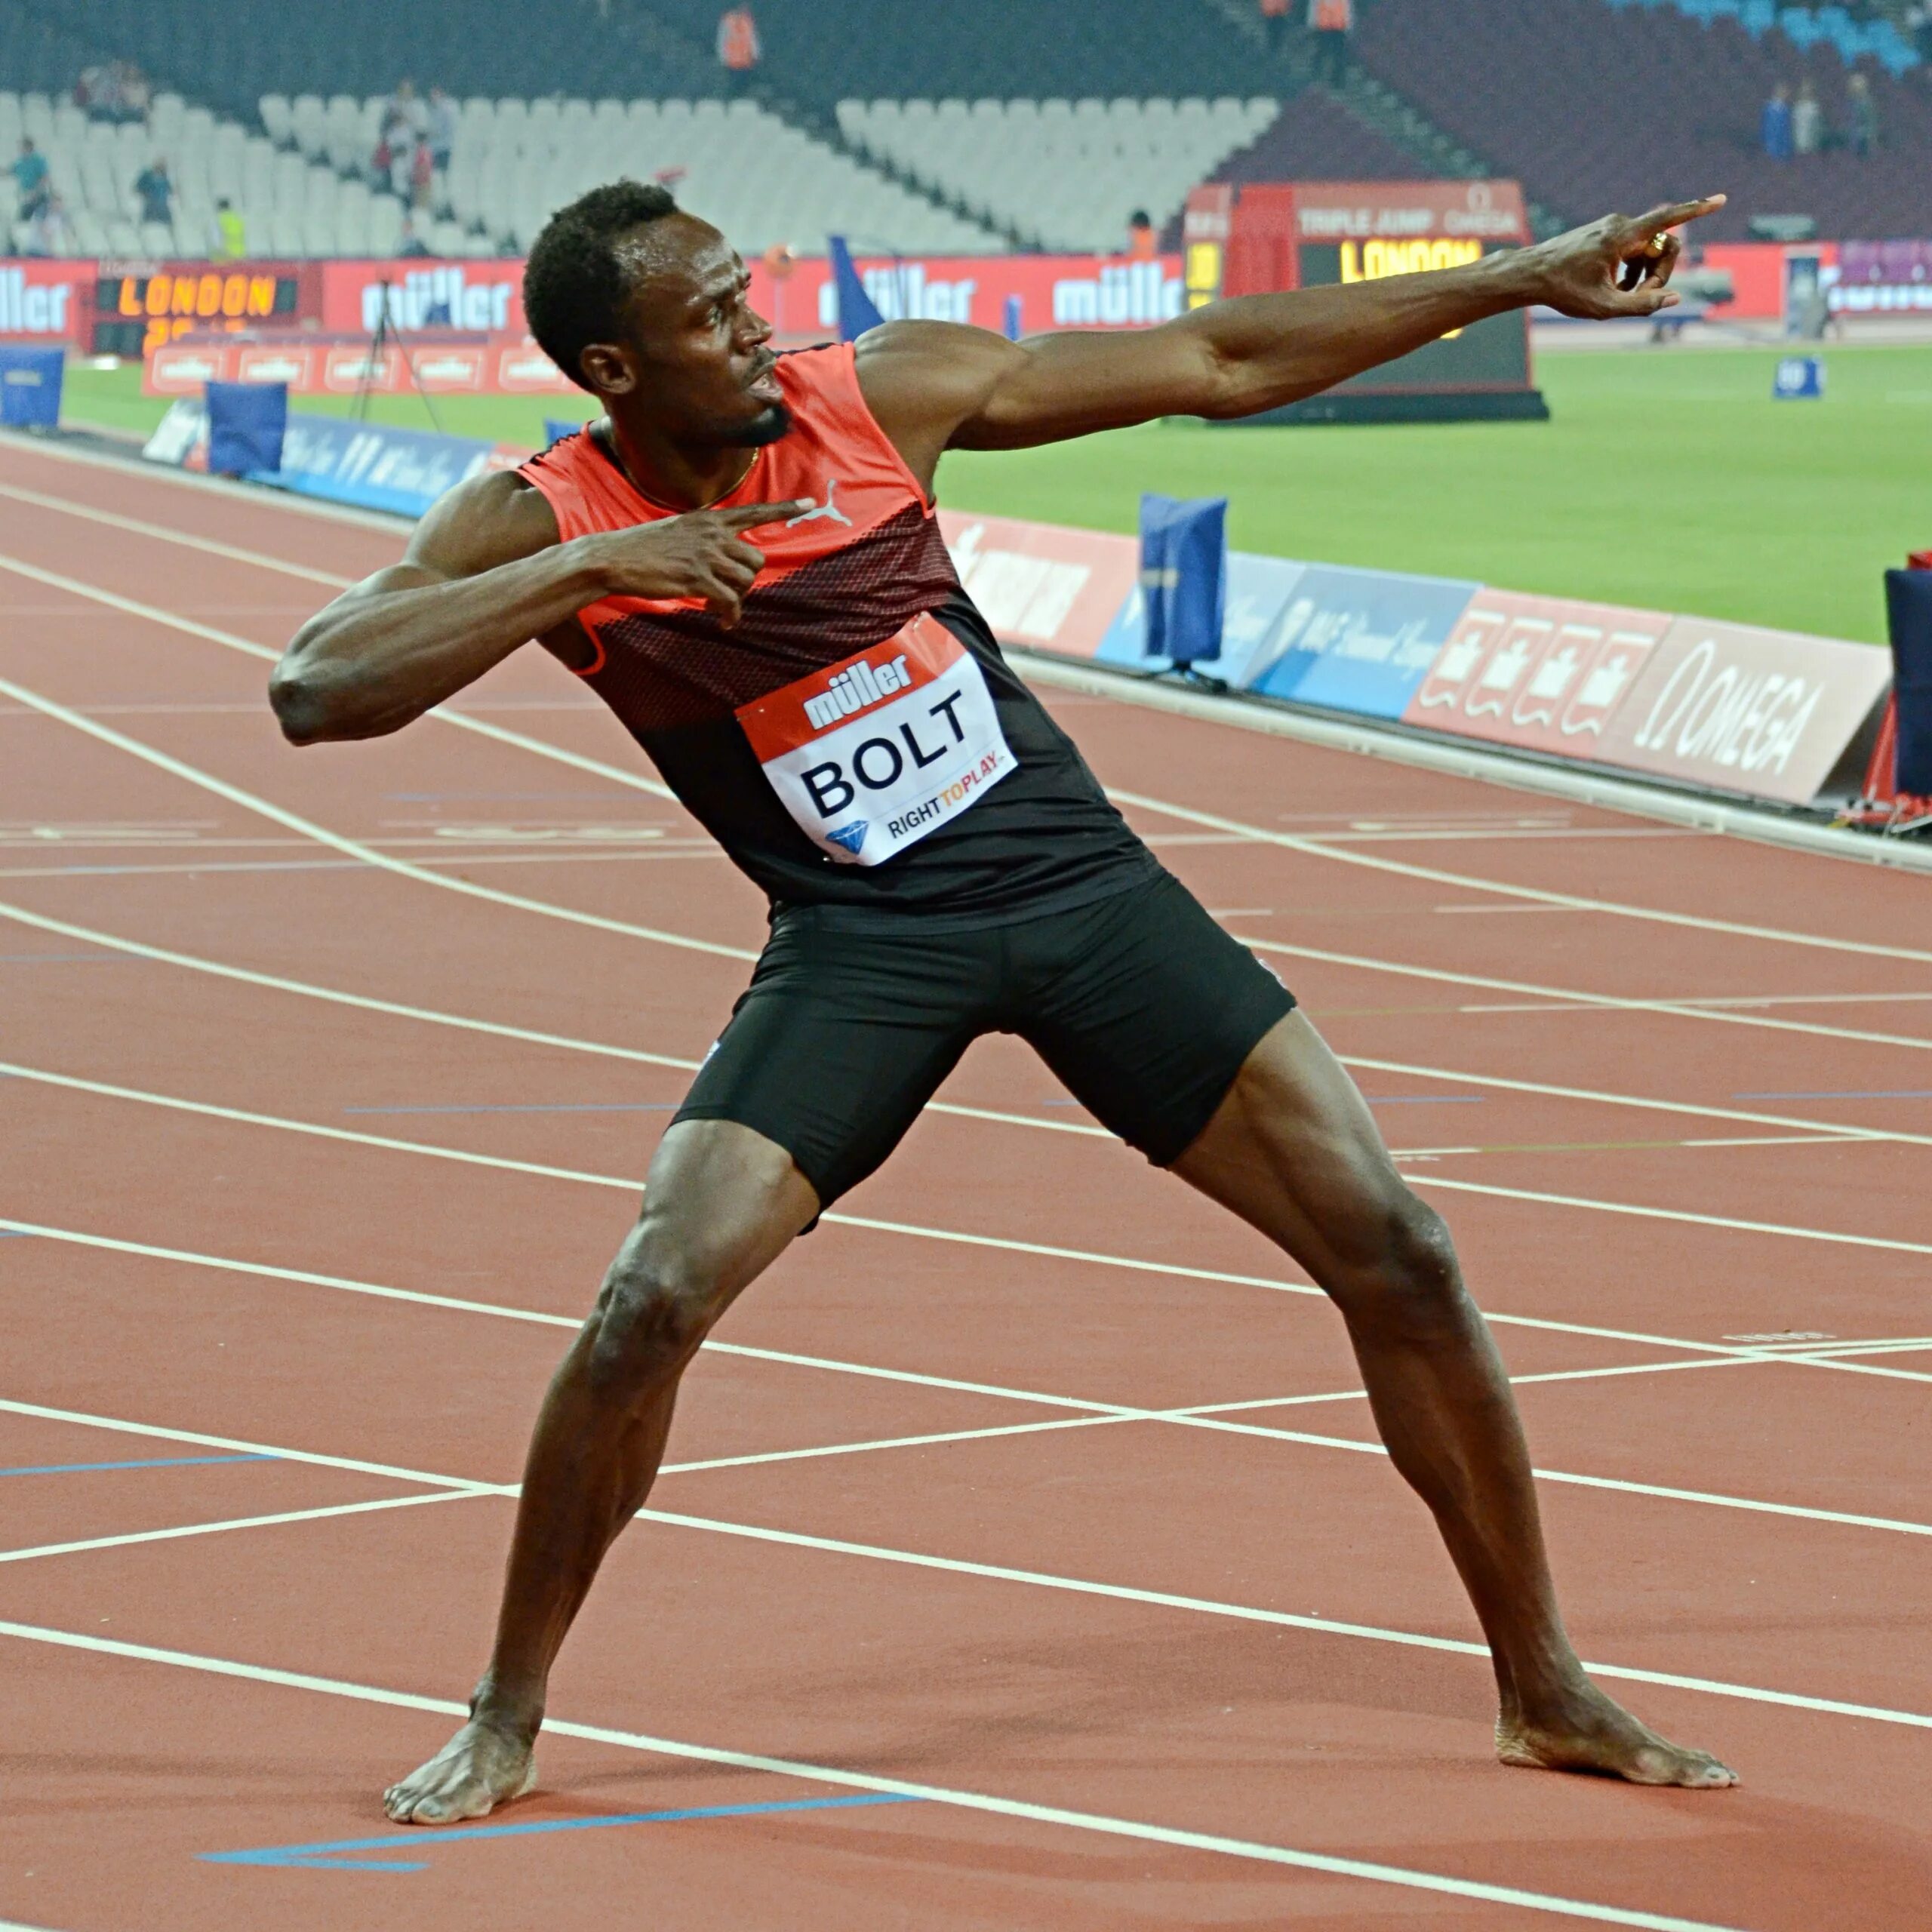 Бегун на стометровке. Усейн болт. Самый быстрый человек Усейн болт. Усэйн болт скорость. Usain Bolt 2015.